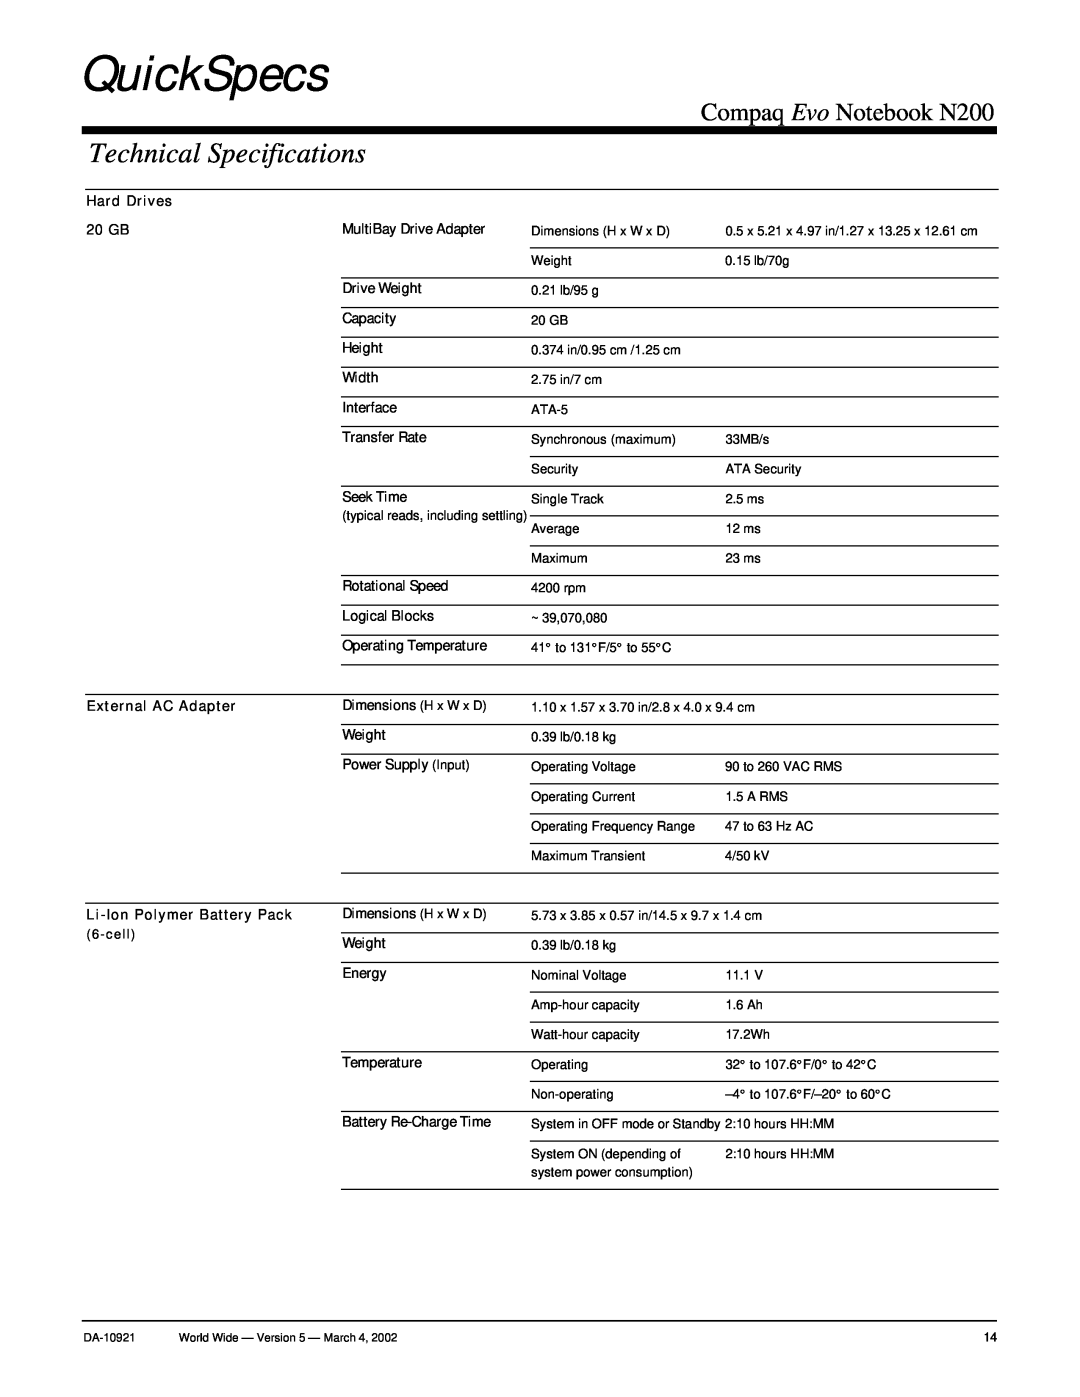 Compaq warranty QuickSpecs, Technical Specifications, Compaq Evo Notebook N200 